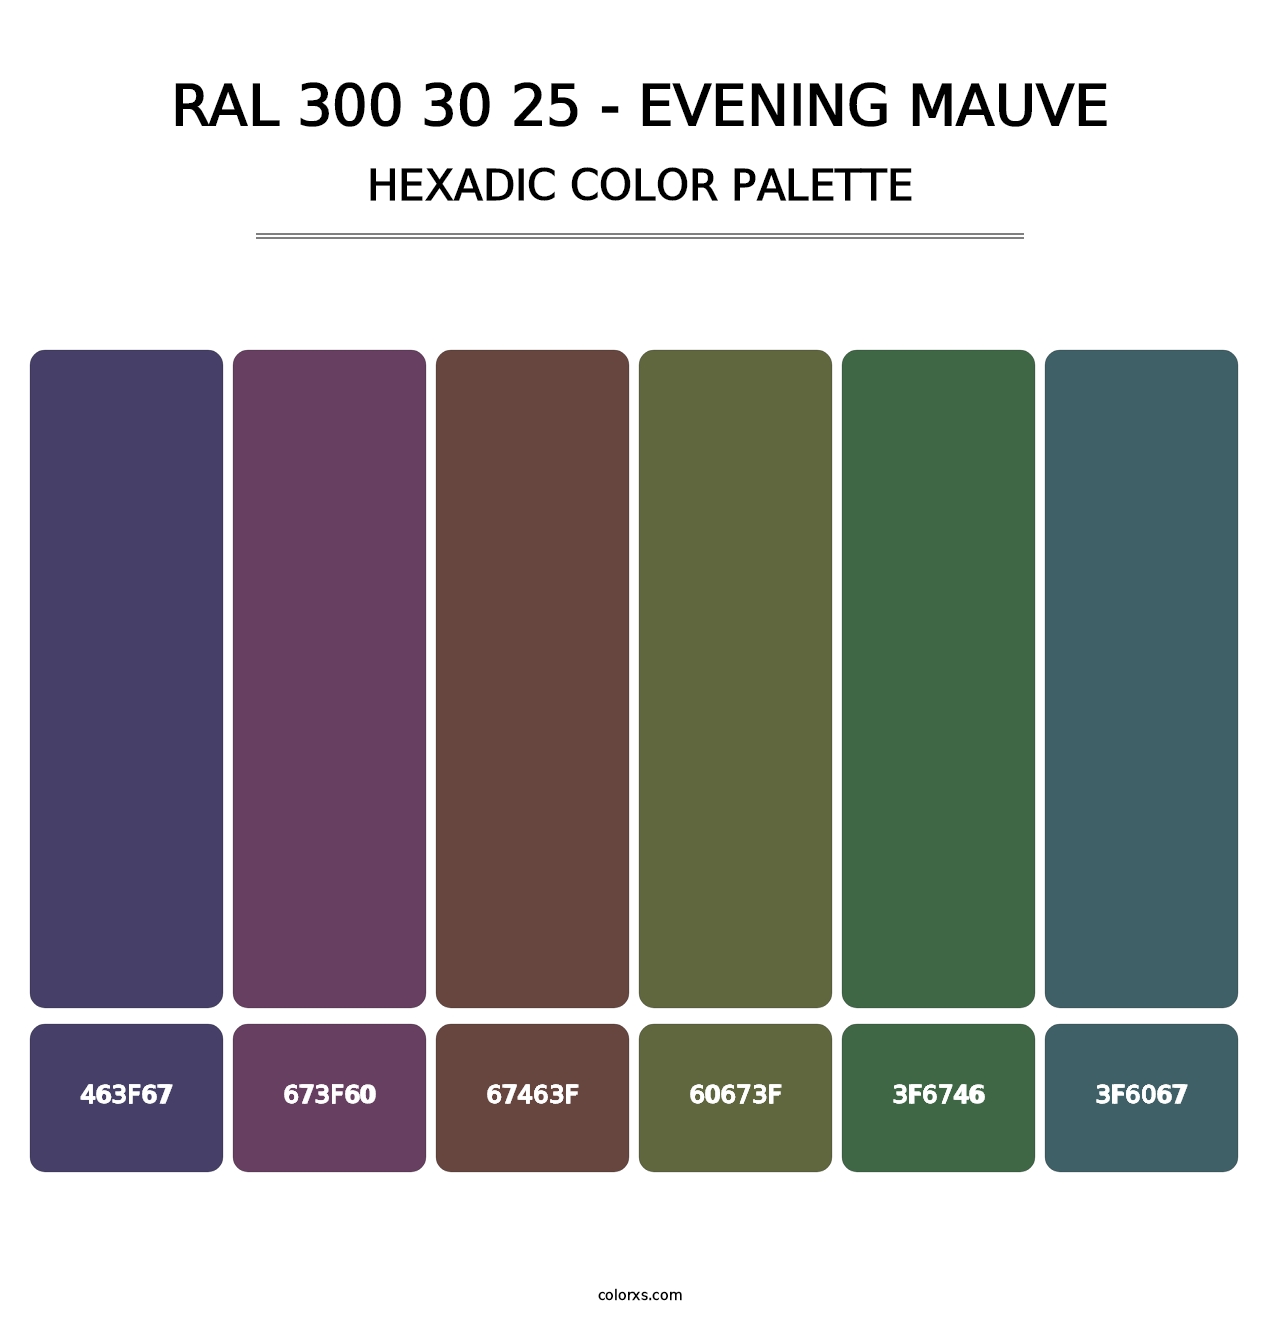 RAL 300 30 25 - Evening Mauve - Hexadic Color Palette